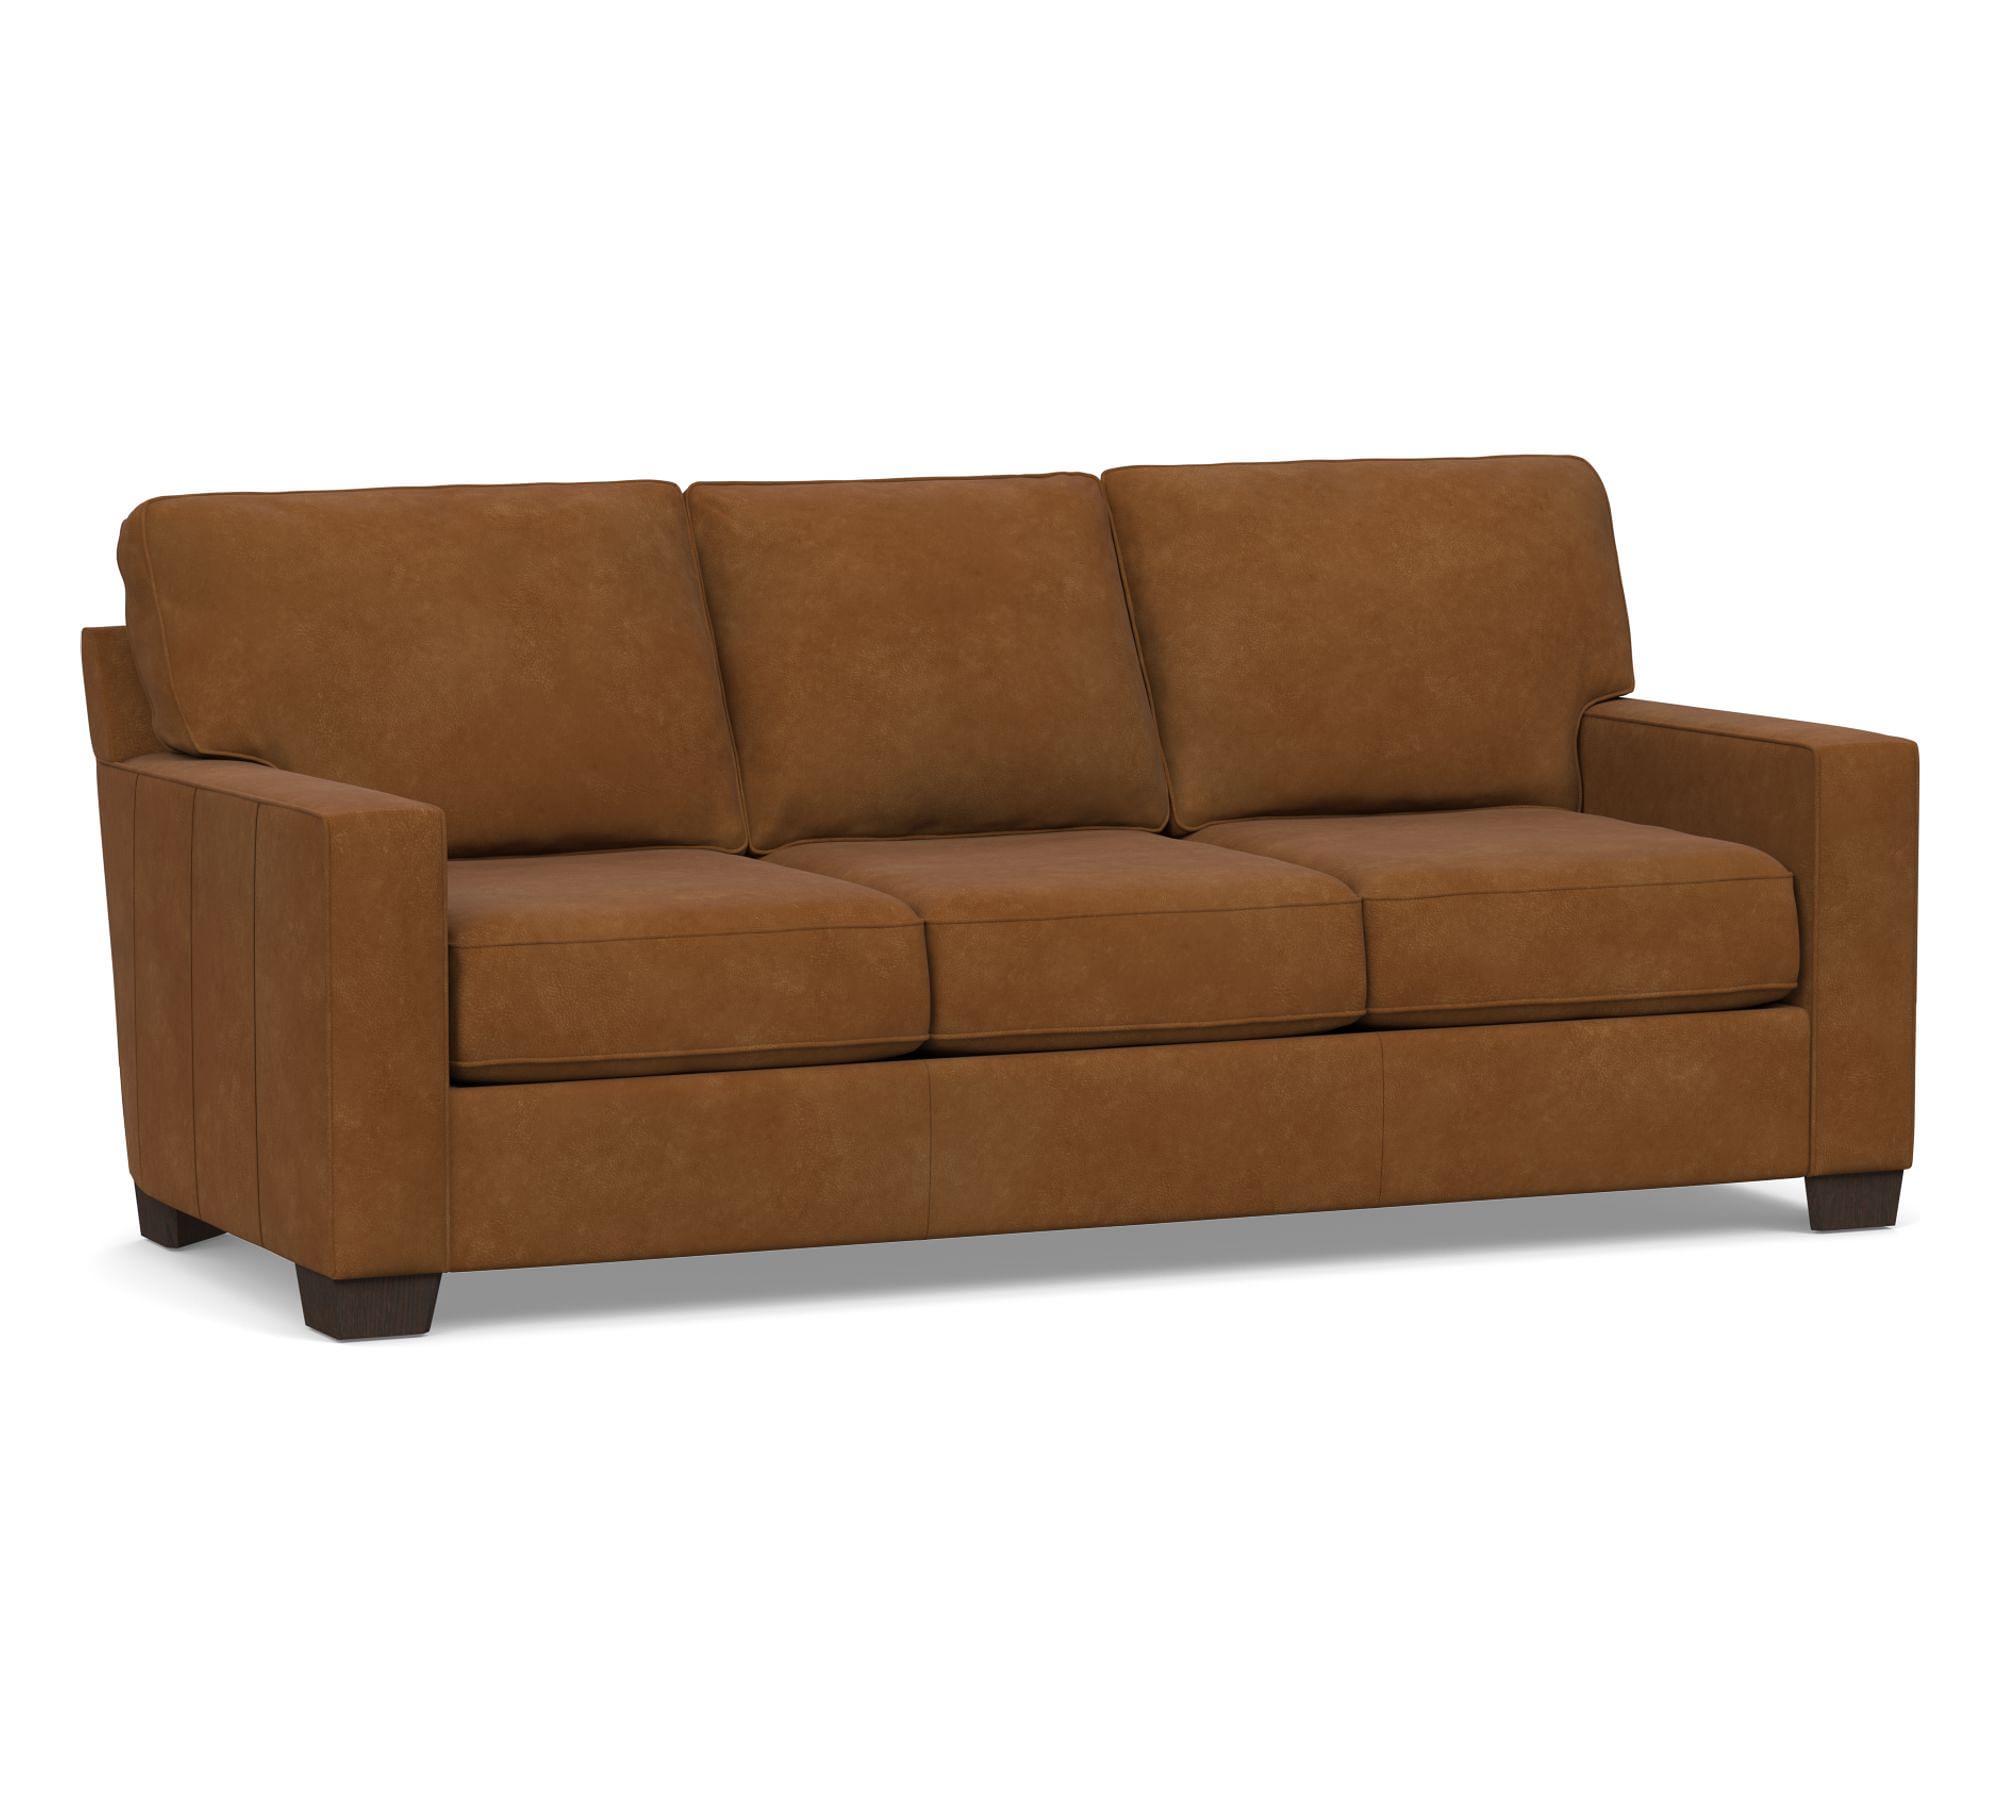 Buchanan Square Arm Leather Sleeper Sofa (84")